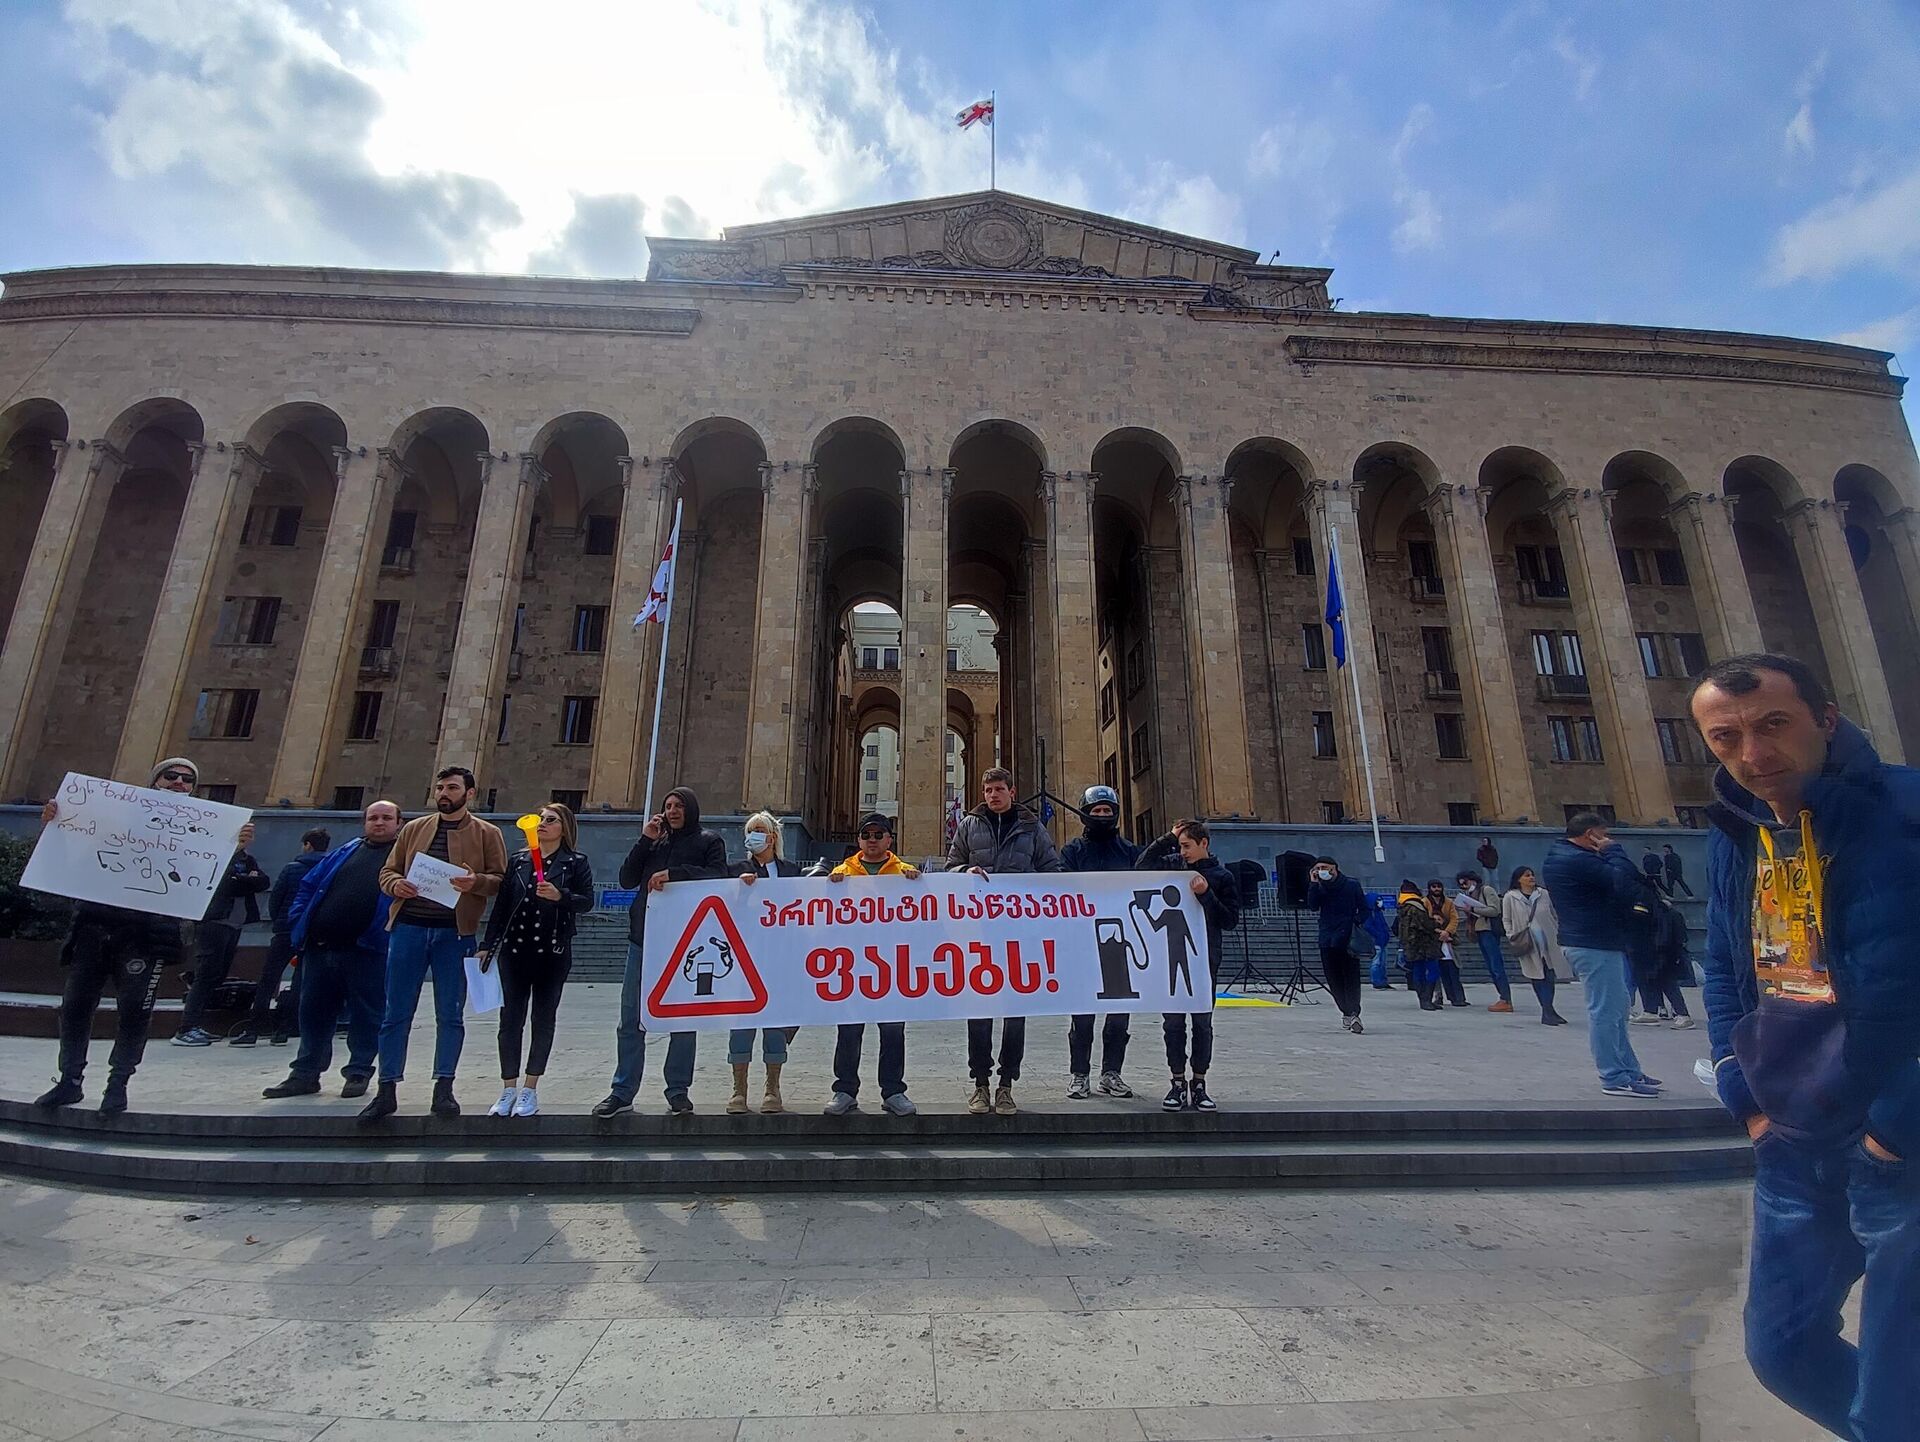 Акция протеста против повышения цен на топливо в столице Грузии 27 марта 2022 - Sputnik Азербайджан, 1920, 27.03.2022